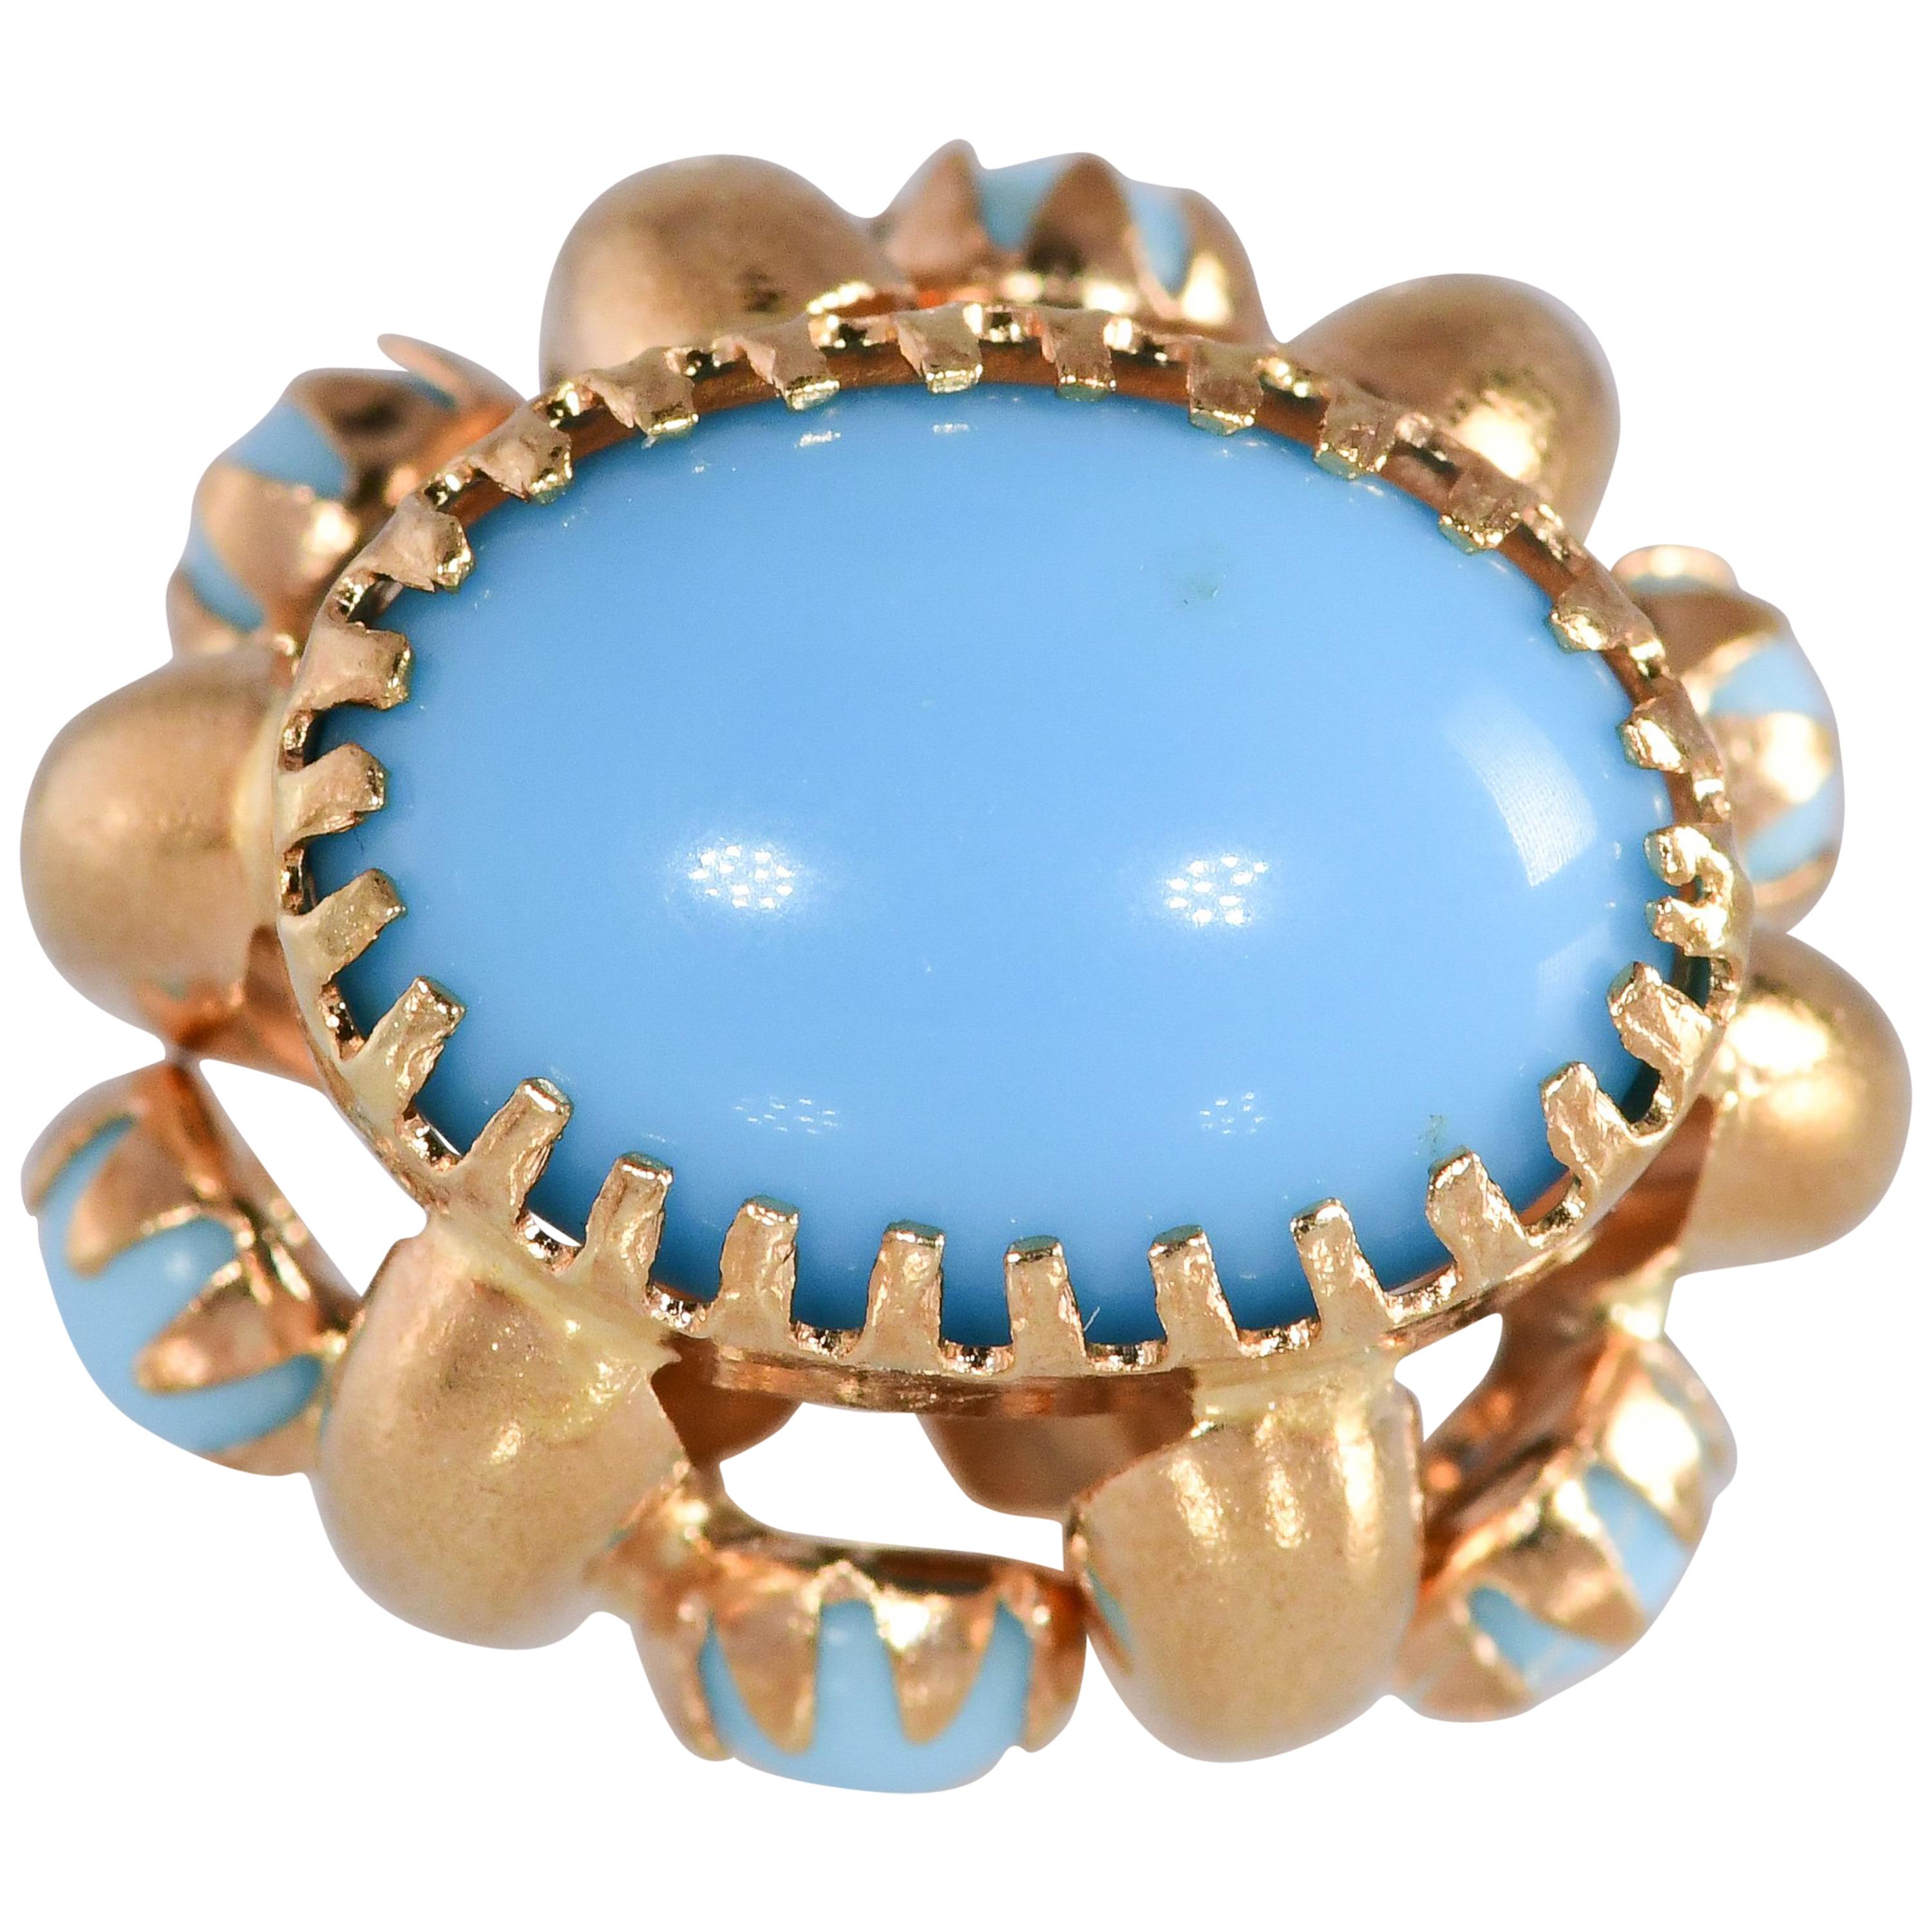 Vintage Three-Dimensional Natural Turquoise Gold 18 Karat Charm or Pendant